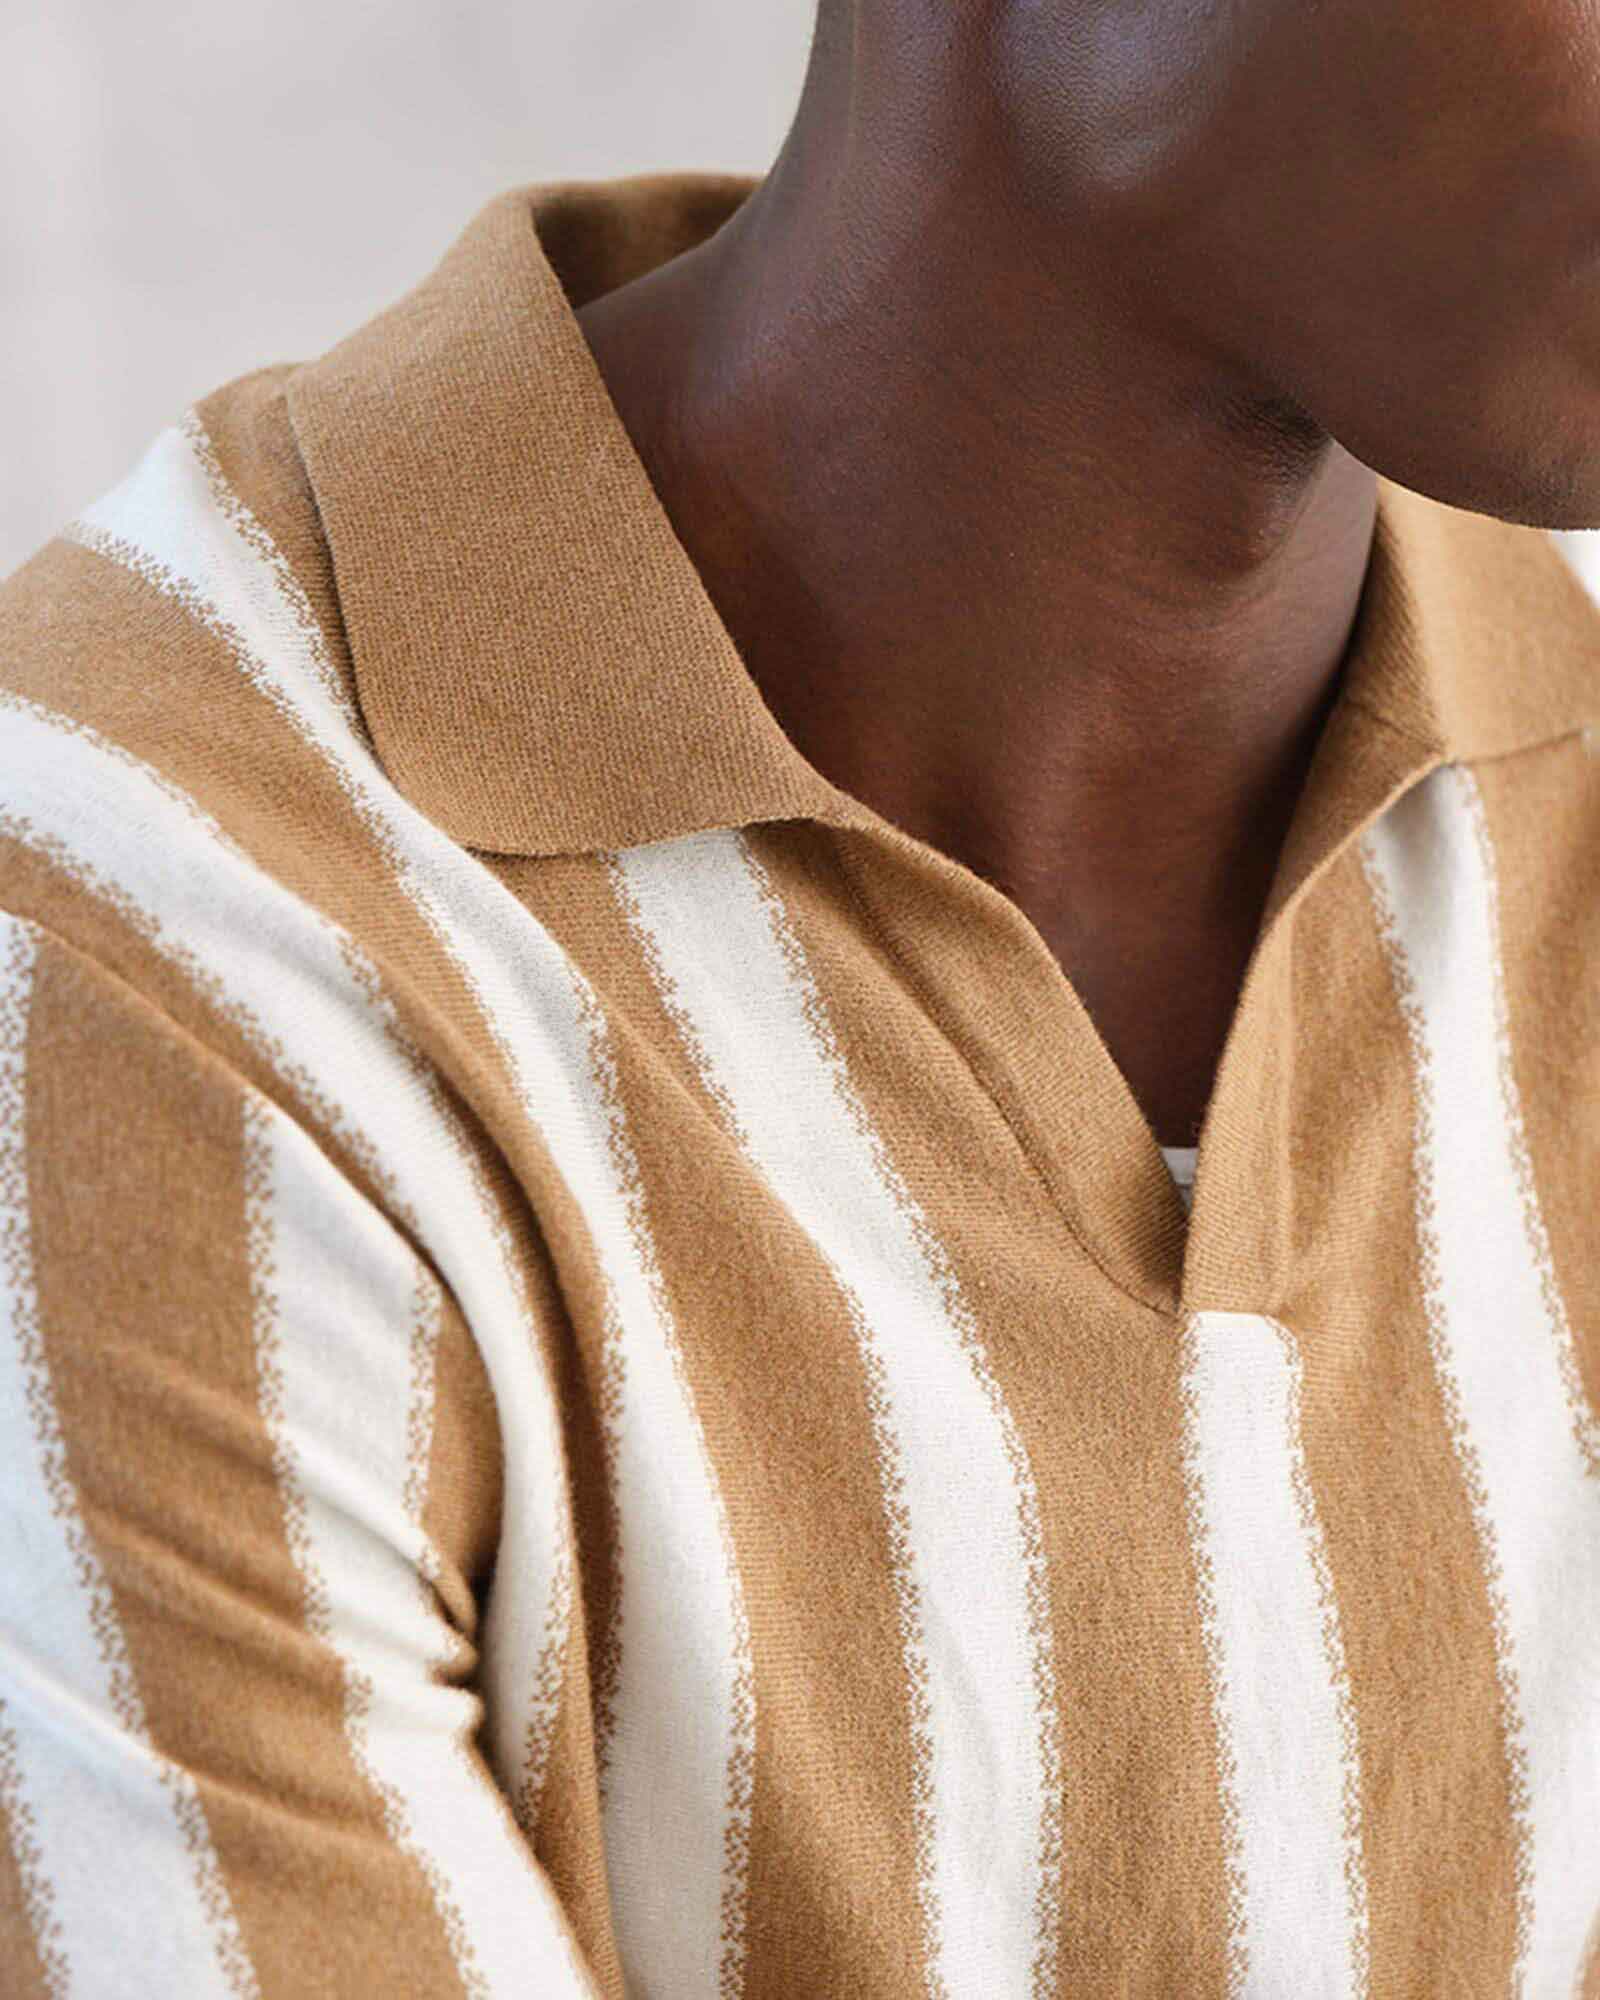 Shop Men's Johnny Collar Vertical Stripe Pullover | Magaschoni Men's | JANE + MERCER